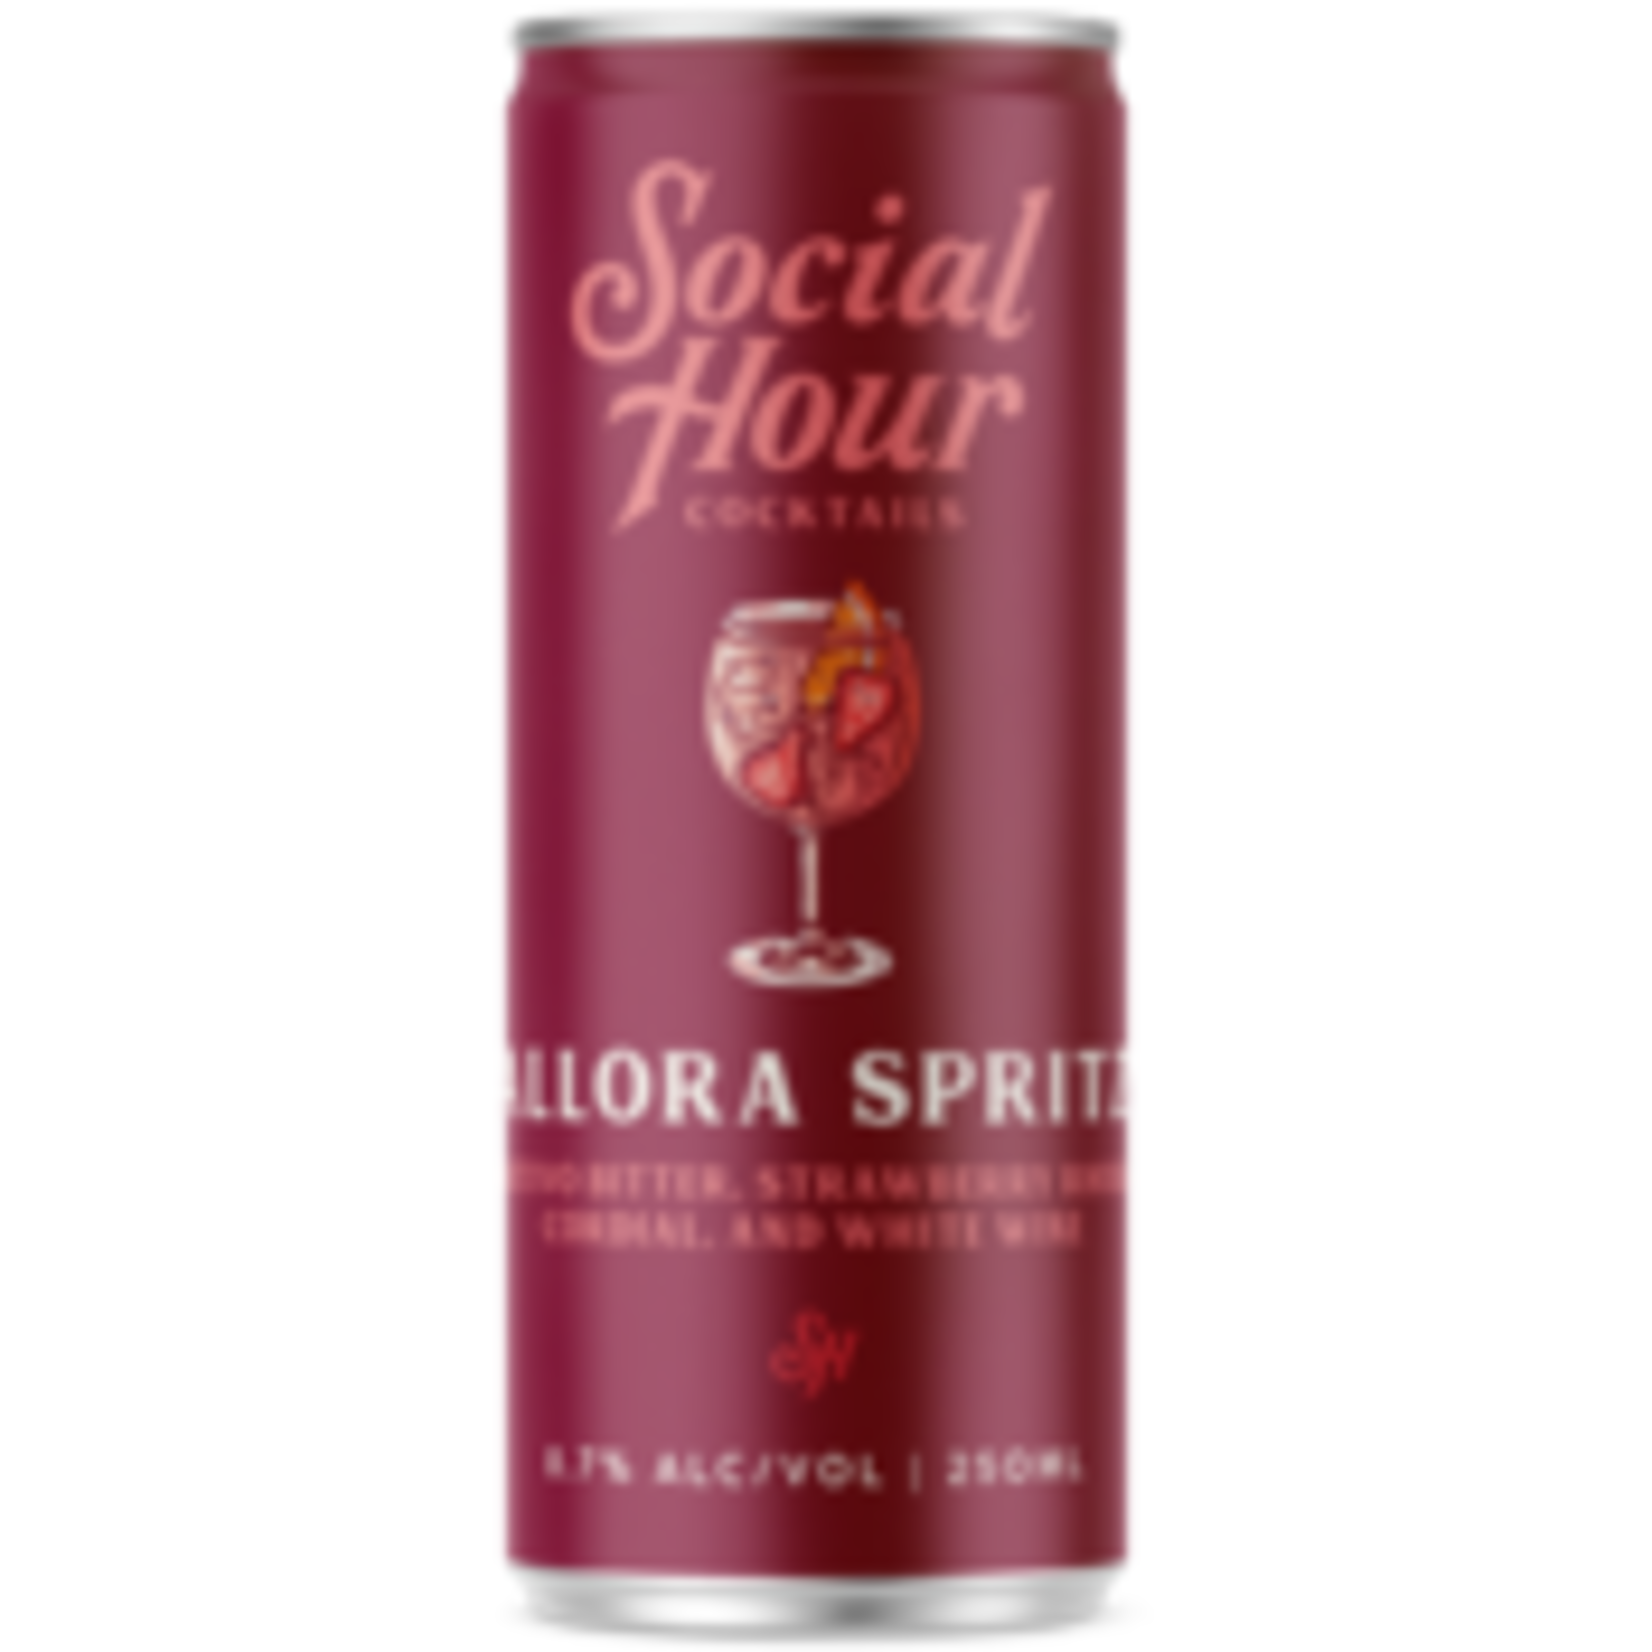 Spirits Social Hour Cocktails Brooklyn Craft Allora Spritz Can 250ml